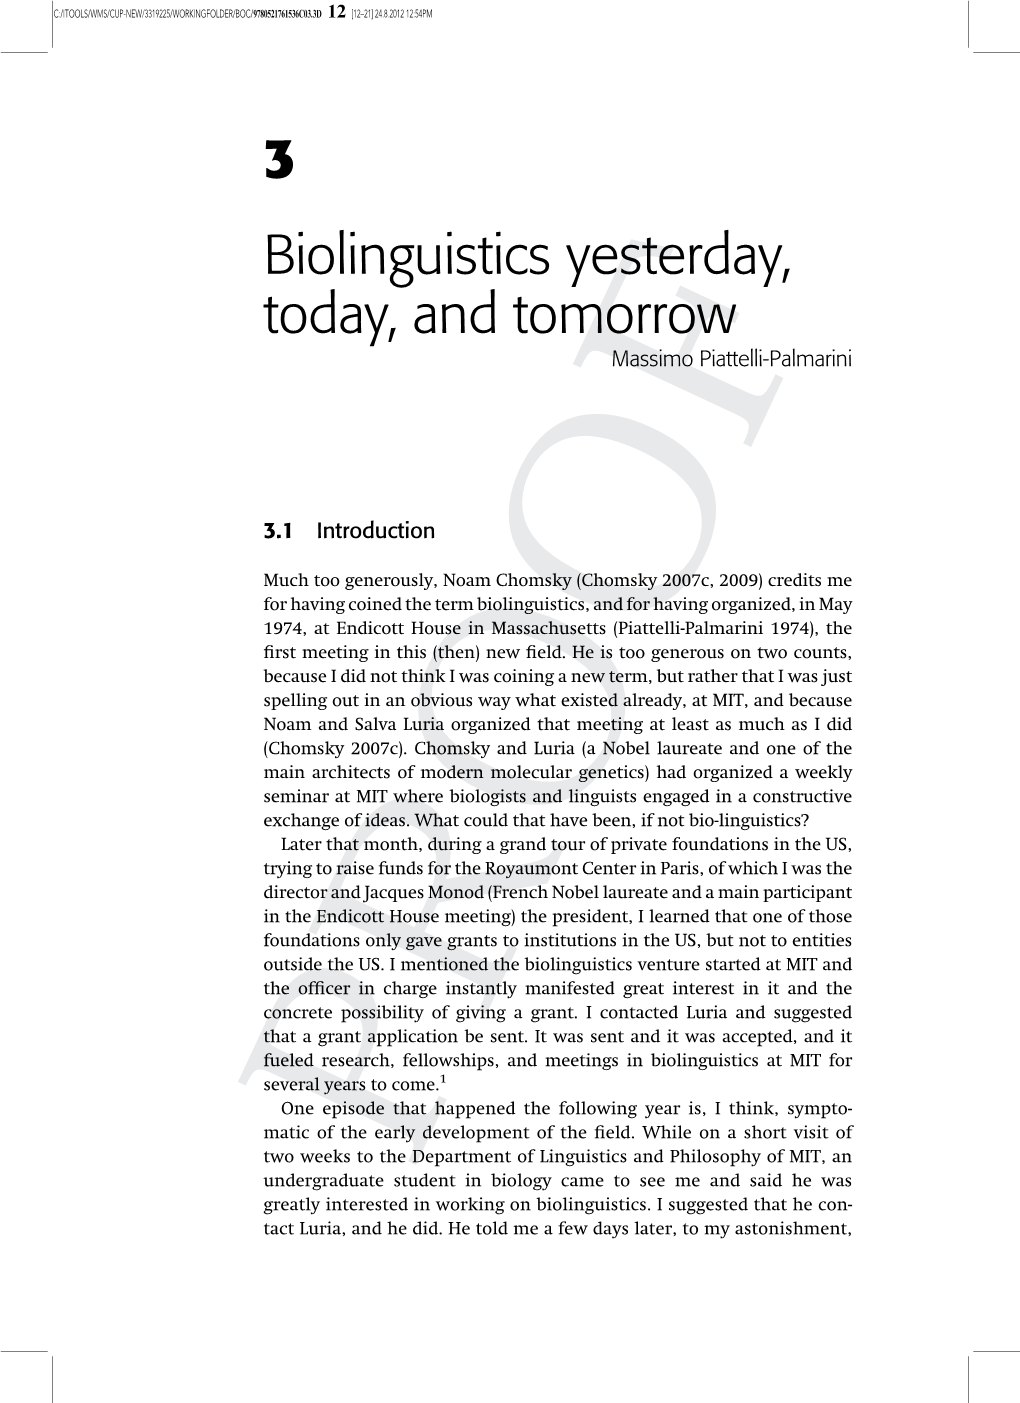 3 Biolinguistics Yesterday, Today, and Tomorrow Massimo Piattelli-Palmarini